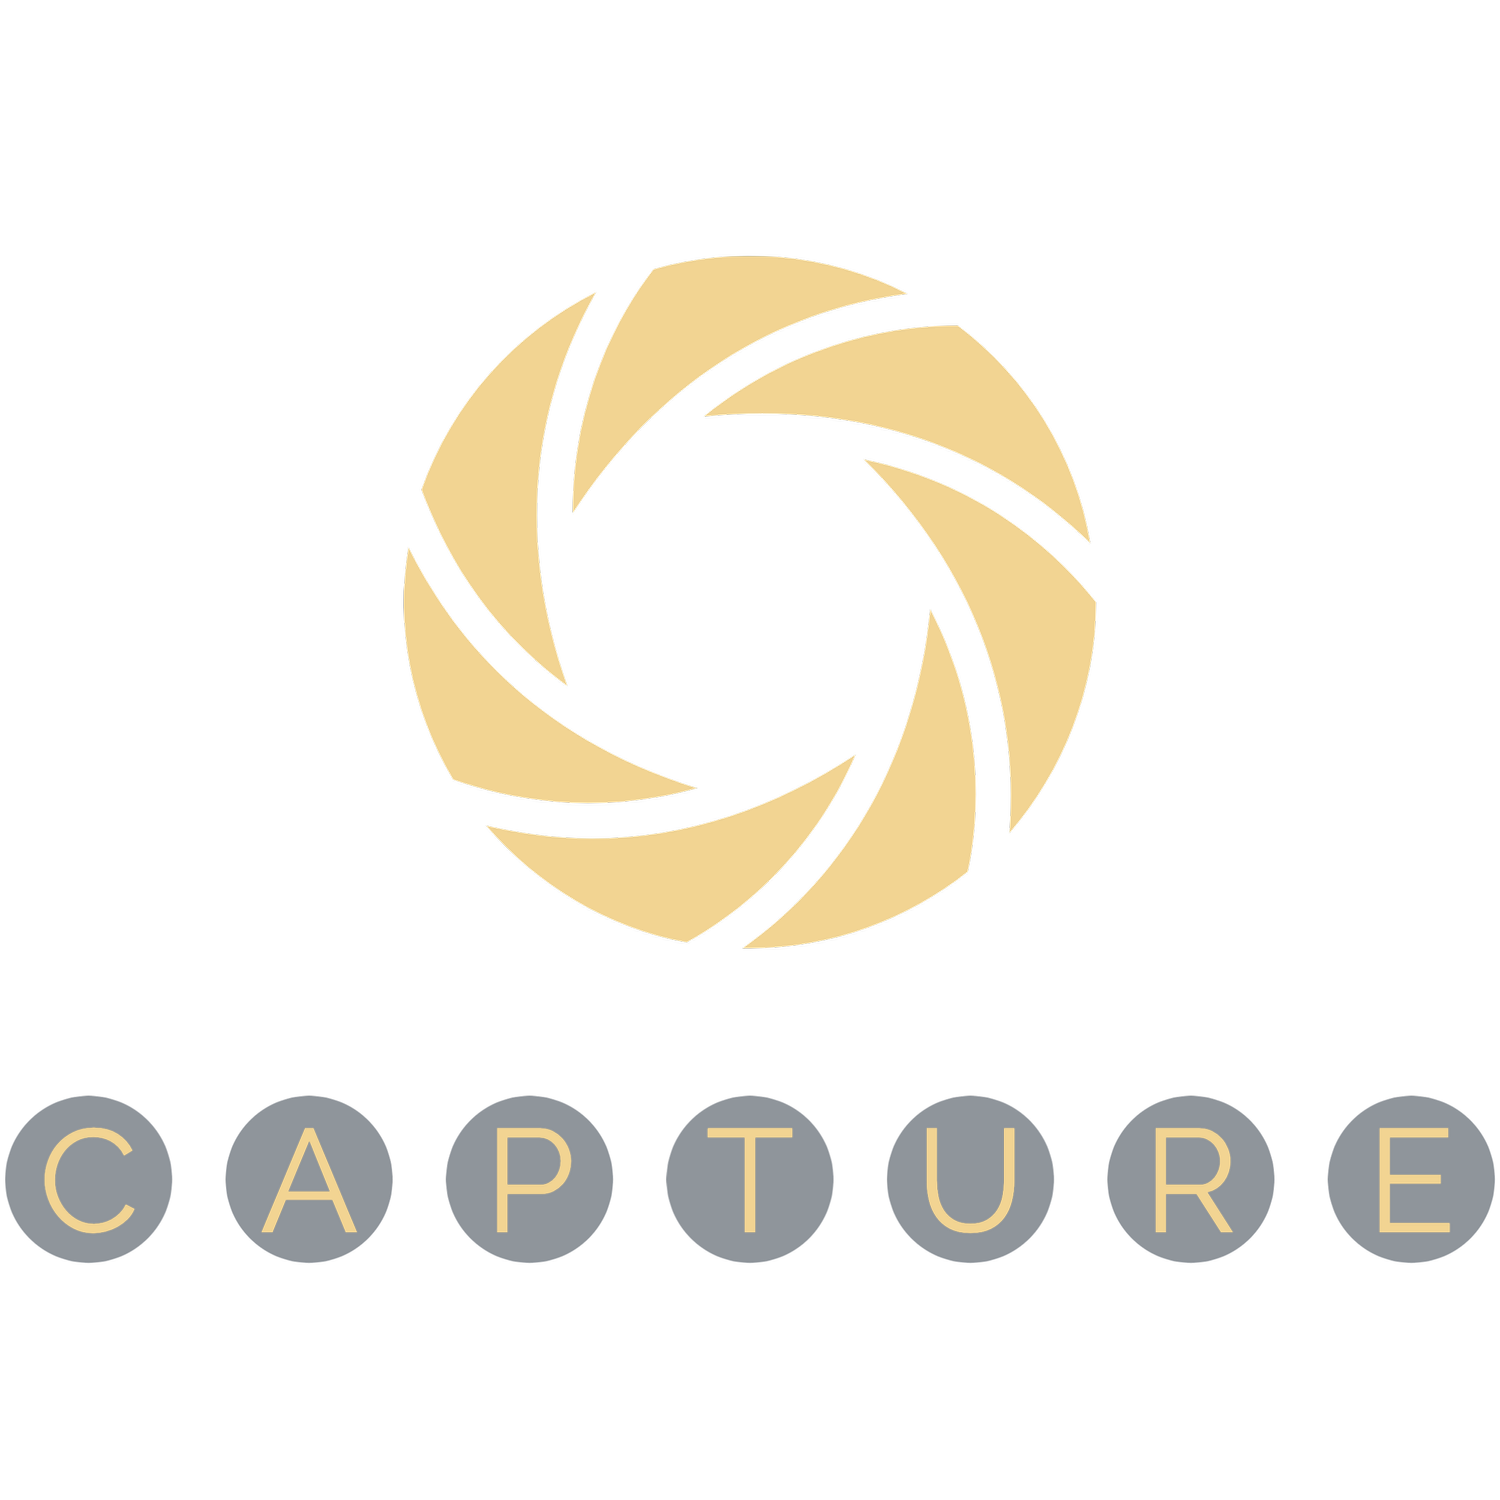 Capture (C.I) Limited